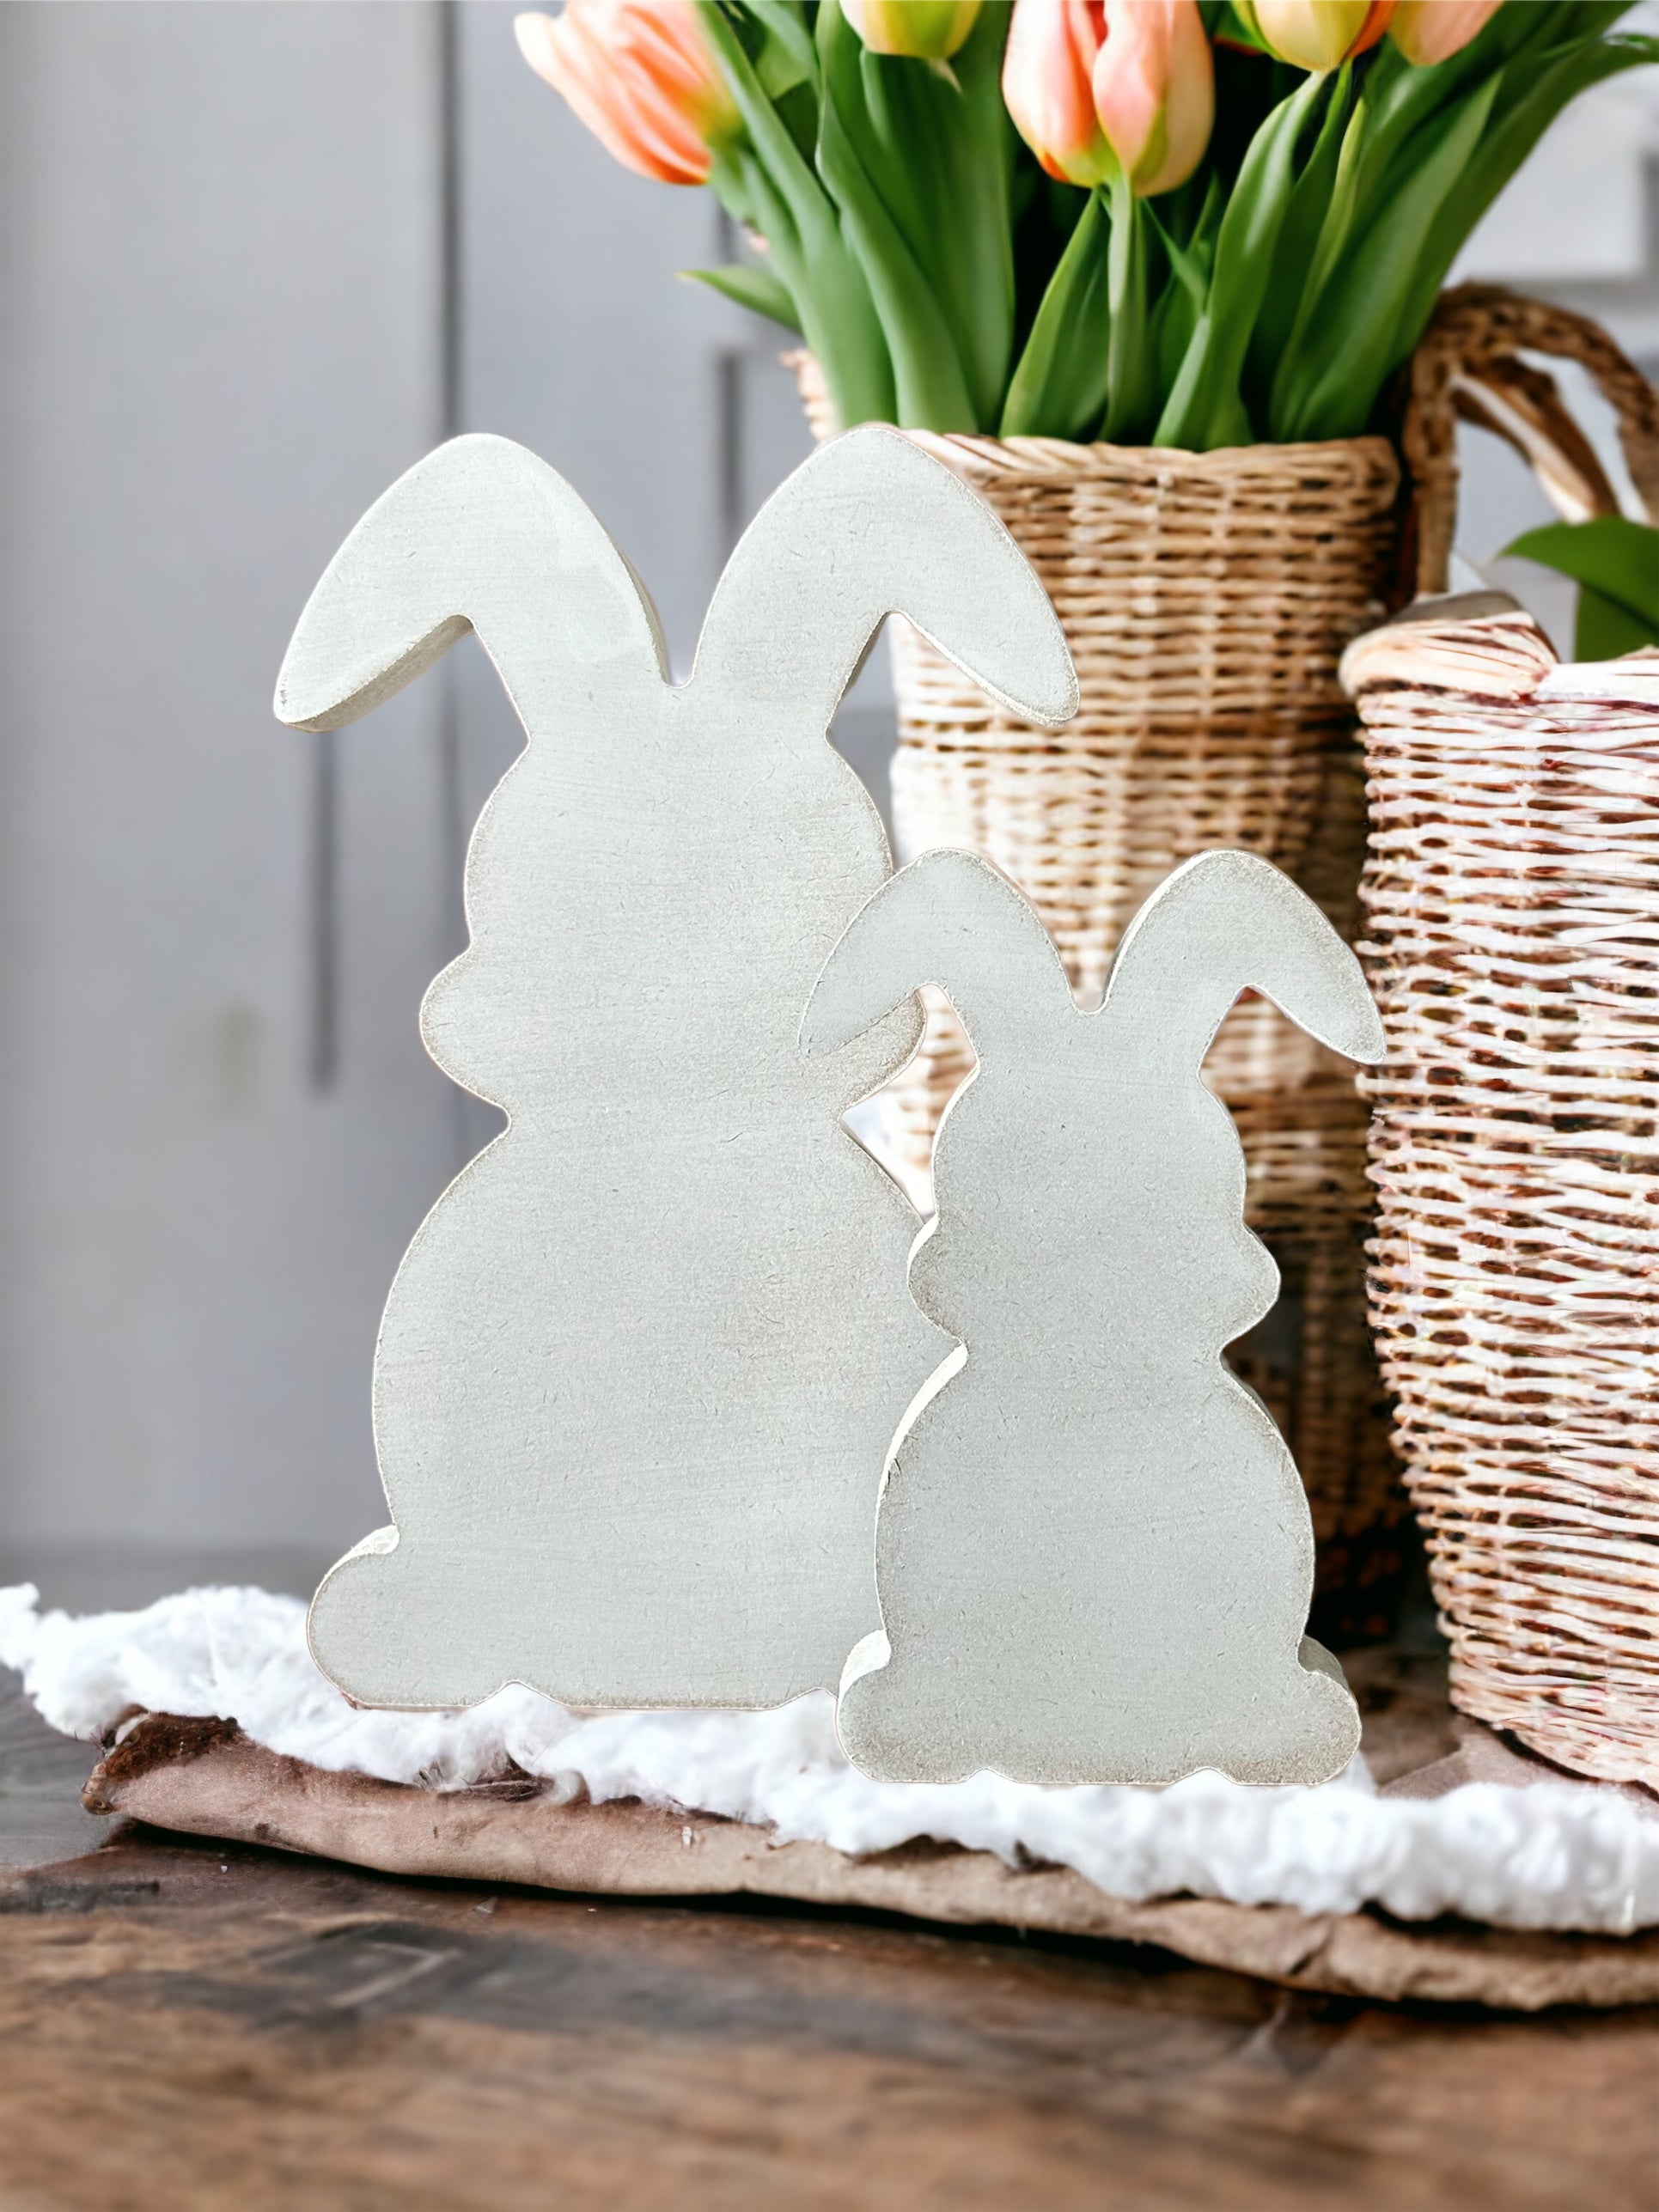 Wood Easter bunnies